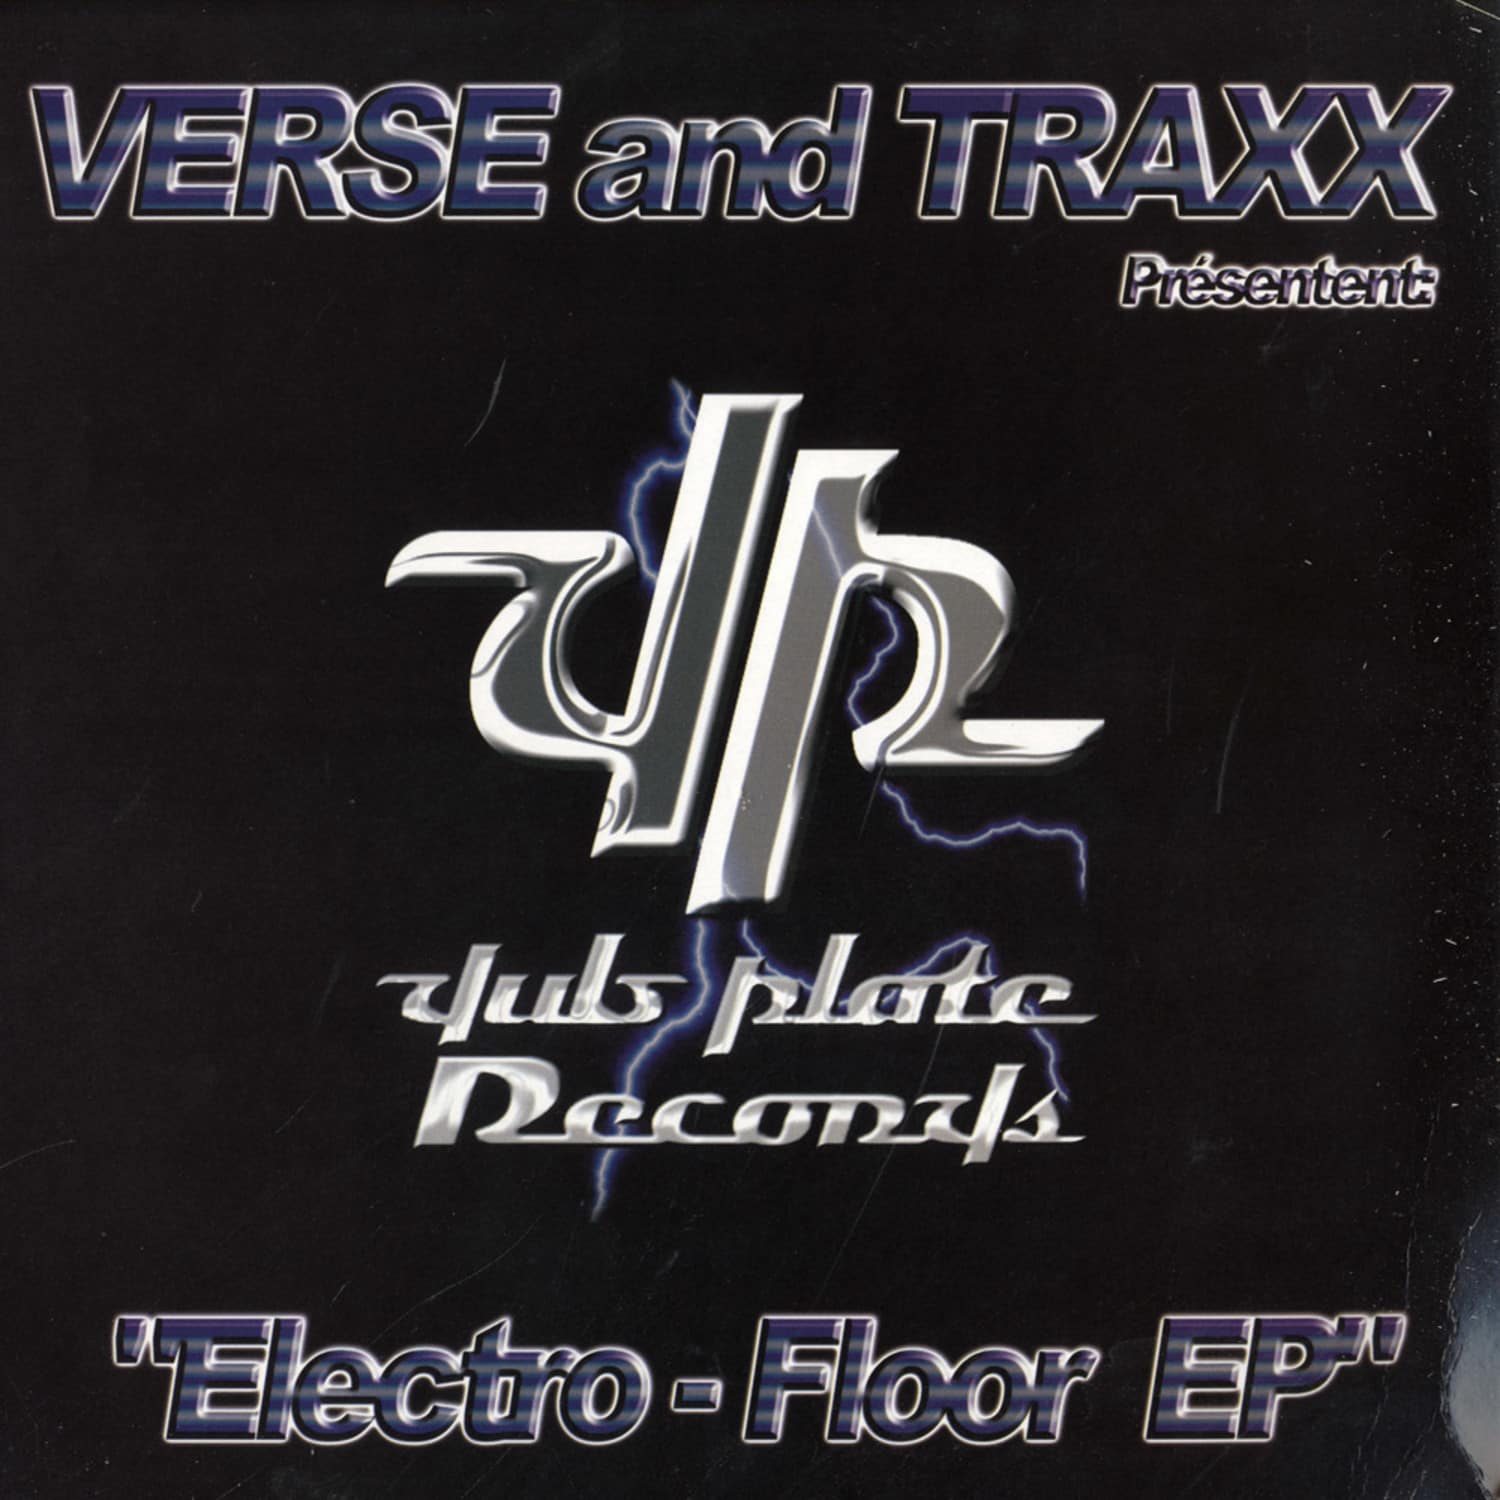 Verse and Traxx present - ELECTRO-FLOOR EP